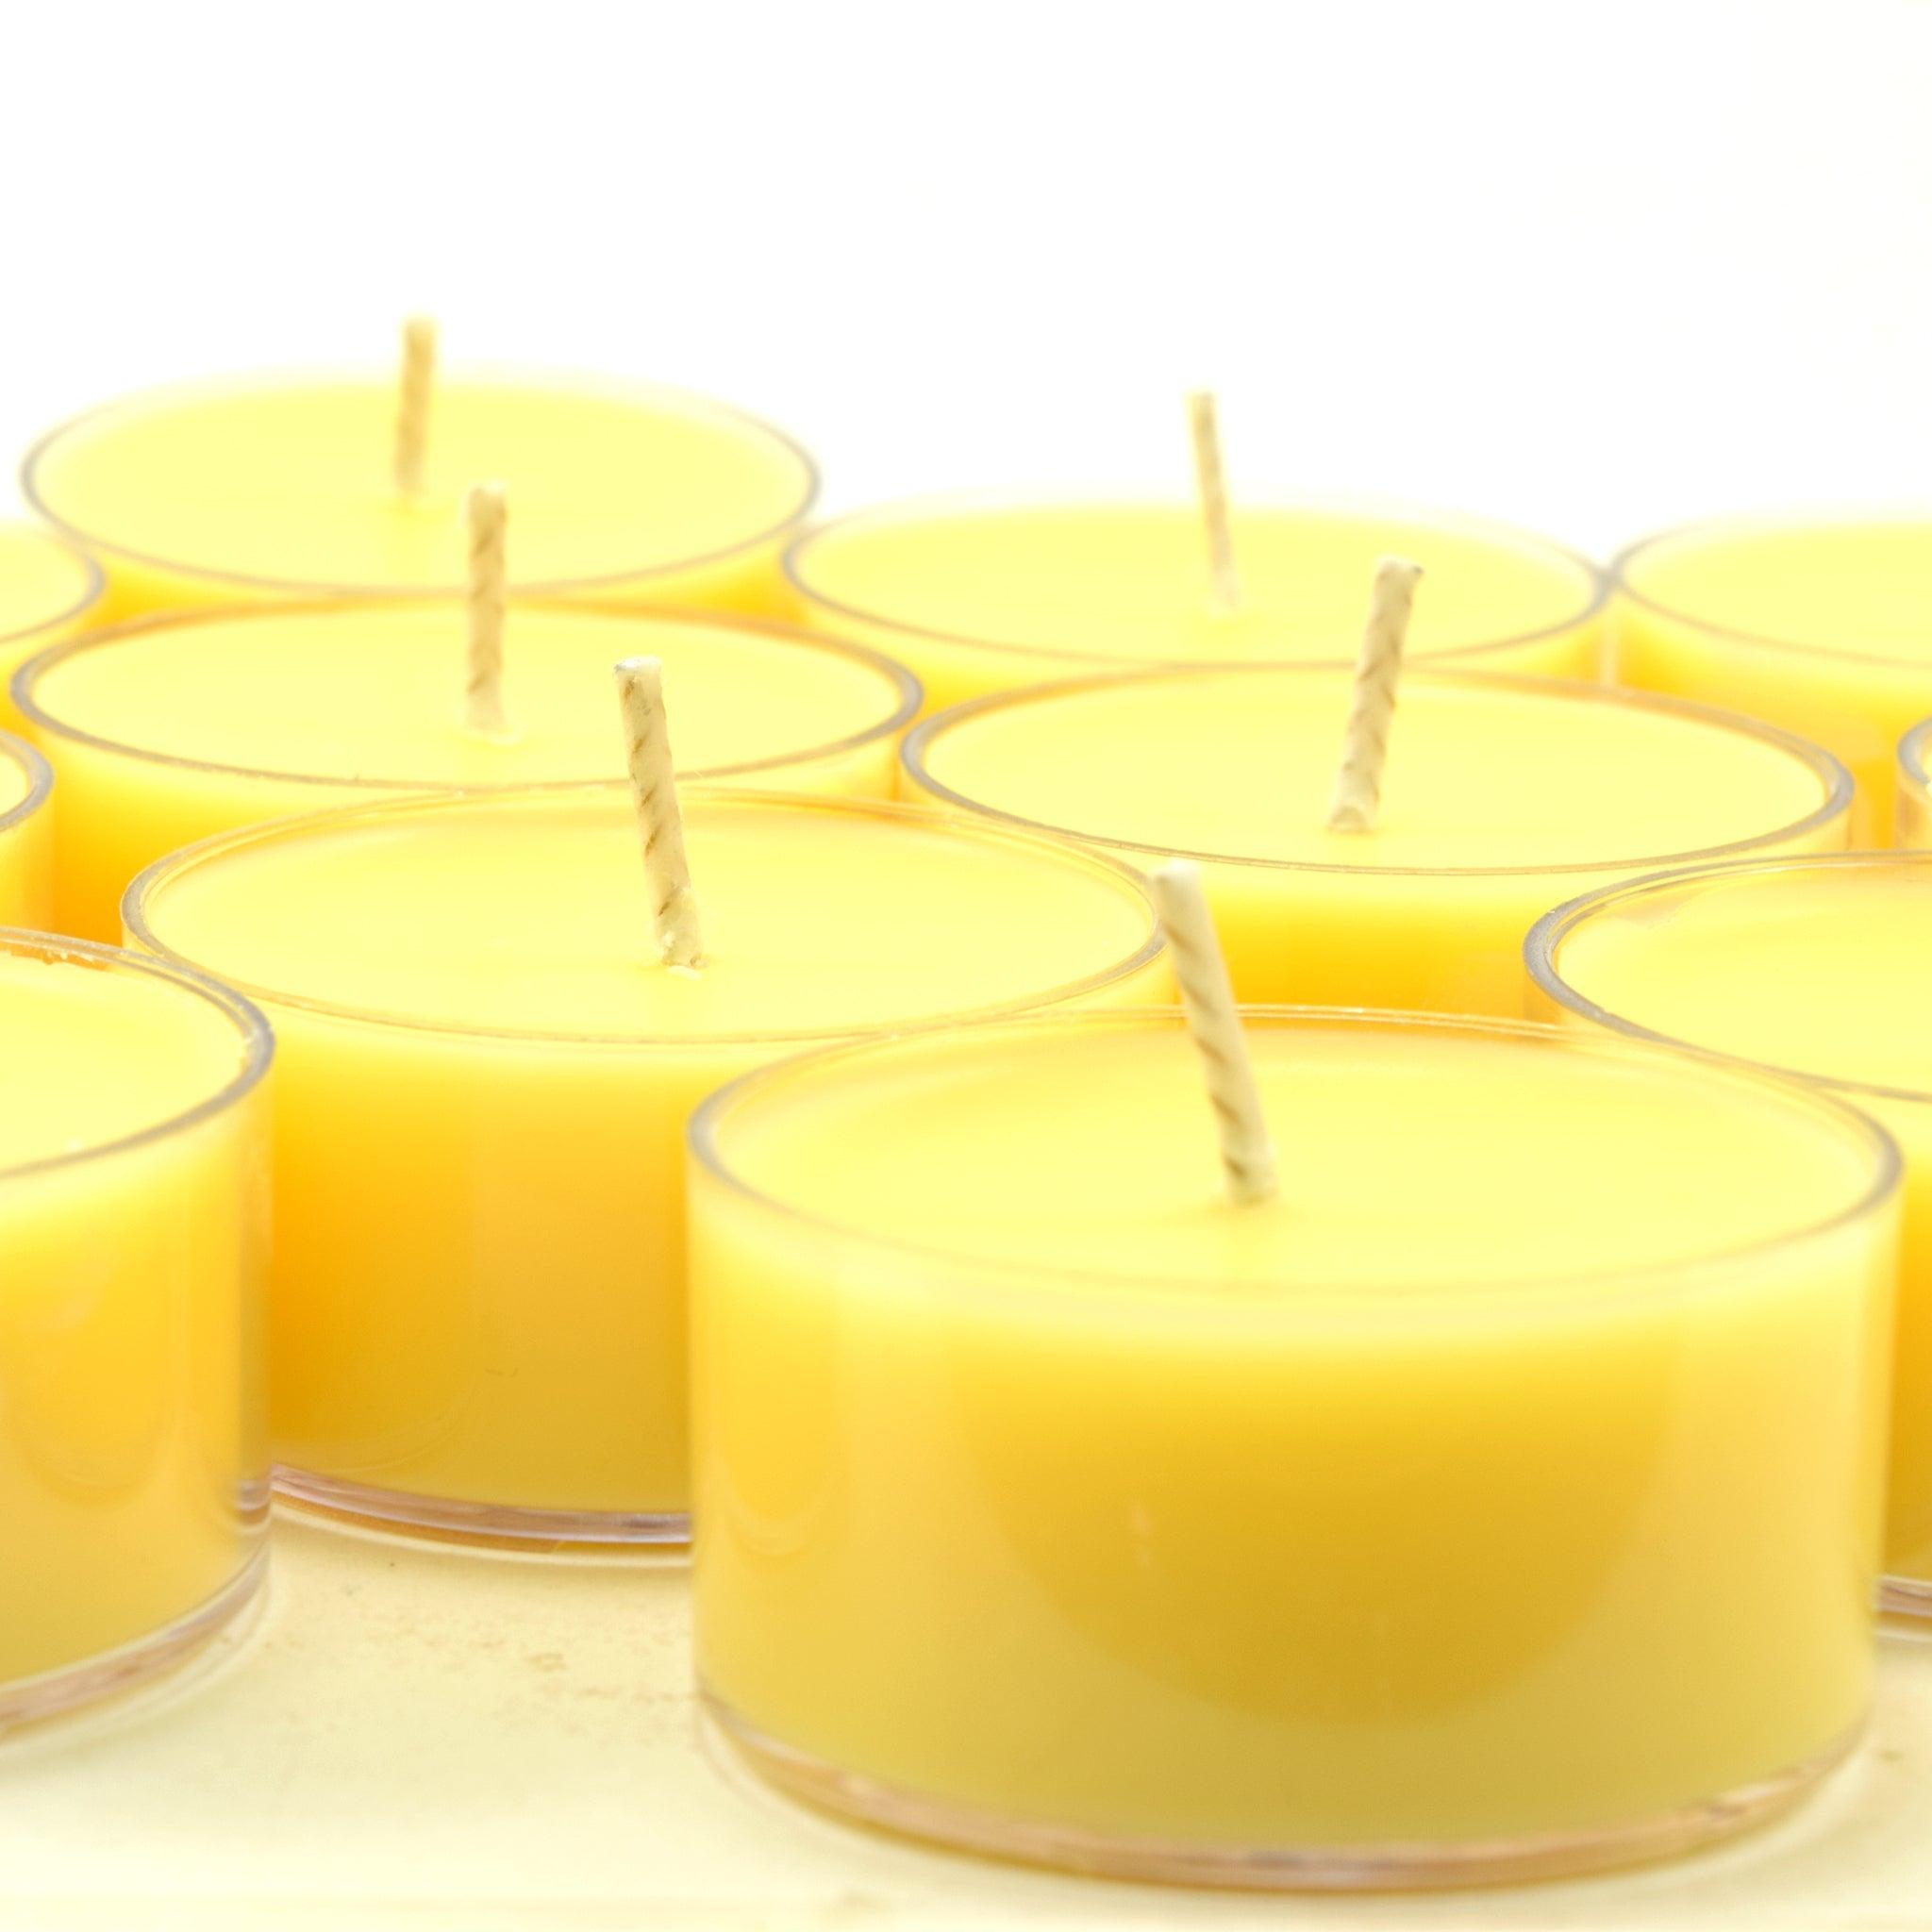 Honeysuckle Jasmine, Soy Tea Light 12-Pack - Candeo Candle